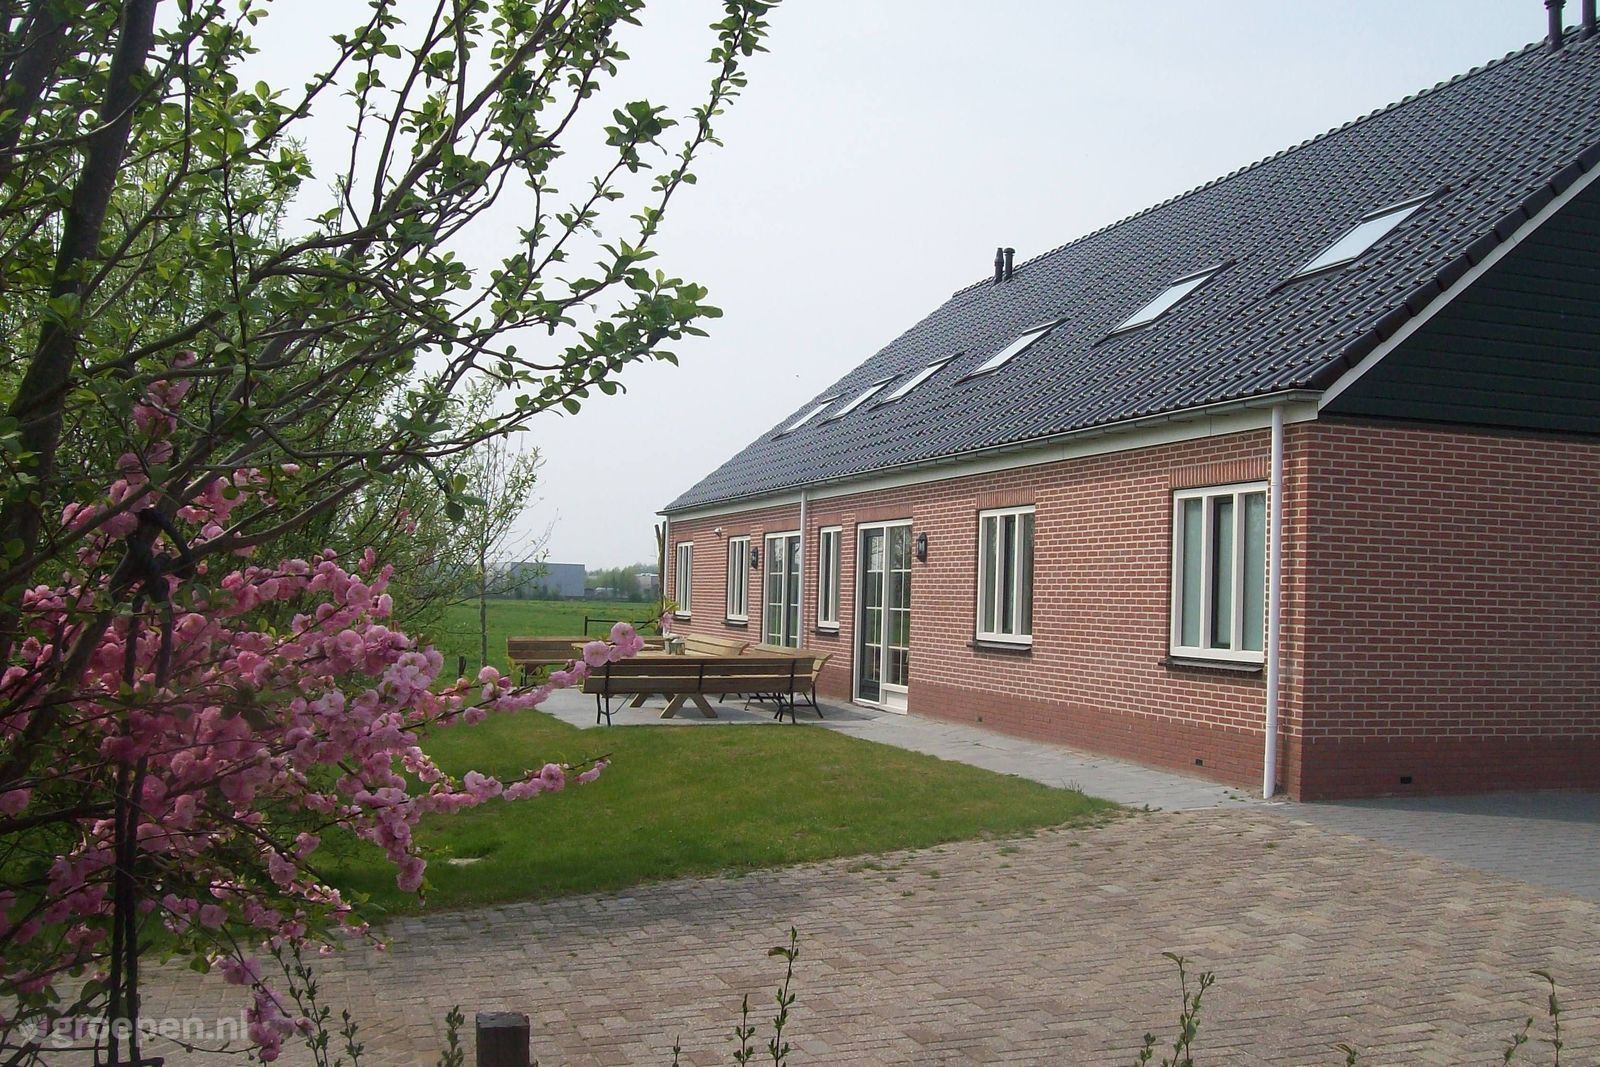 Group accommodation Genemuiden